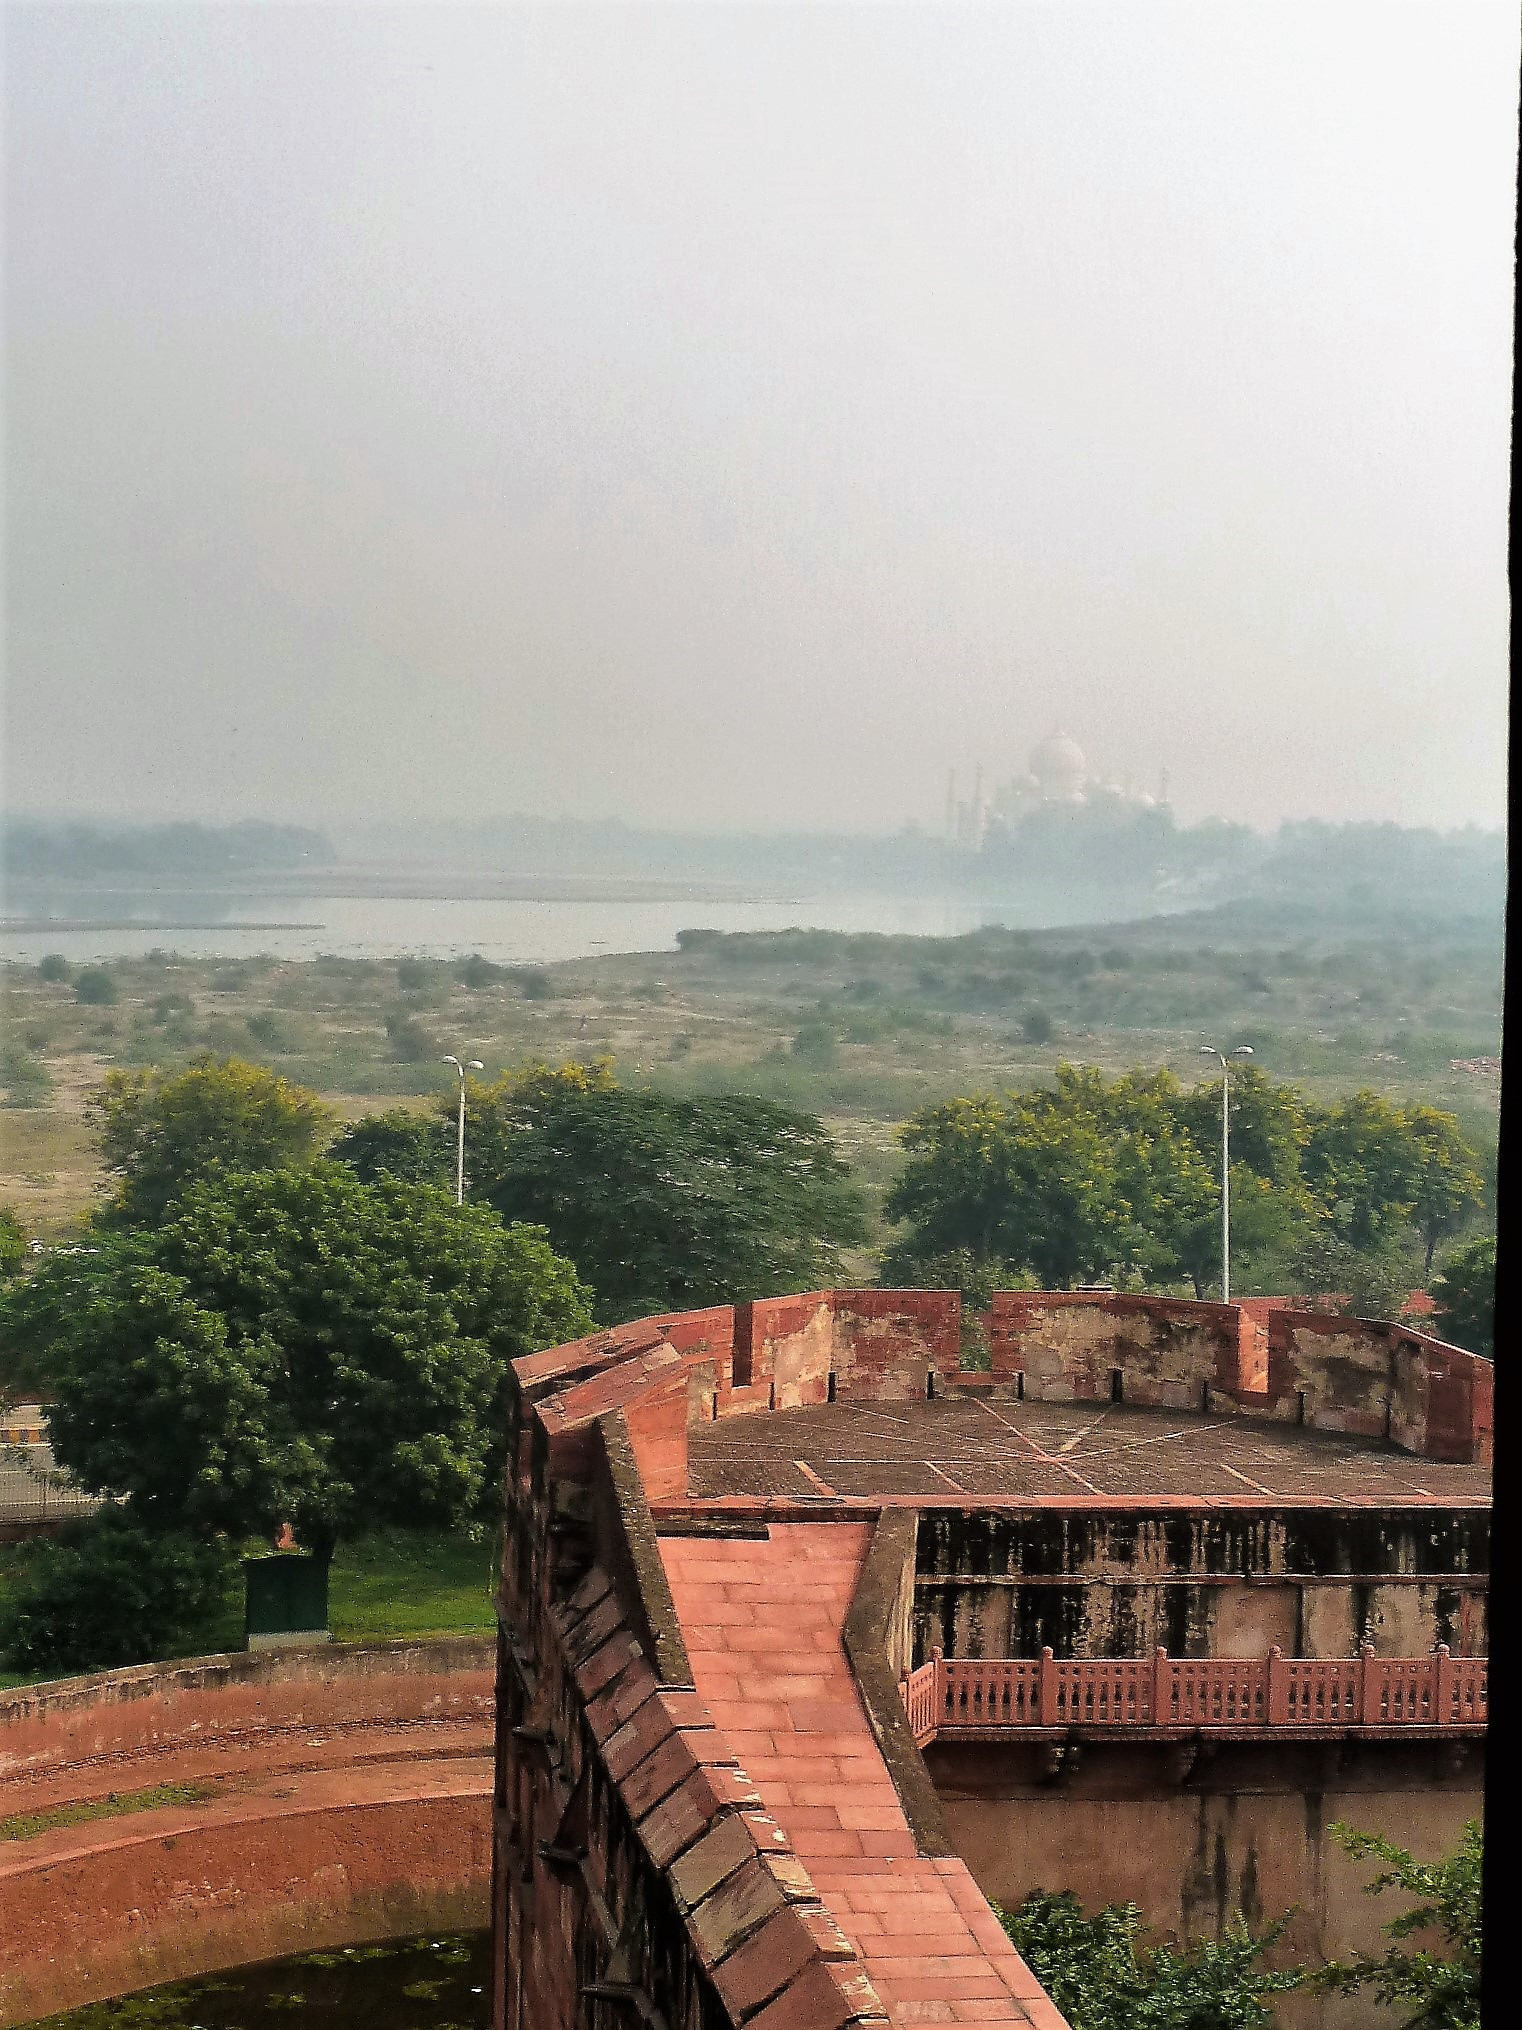 Taj through the smog from the battlements